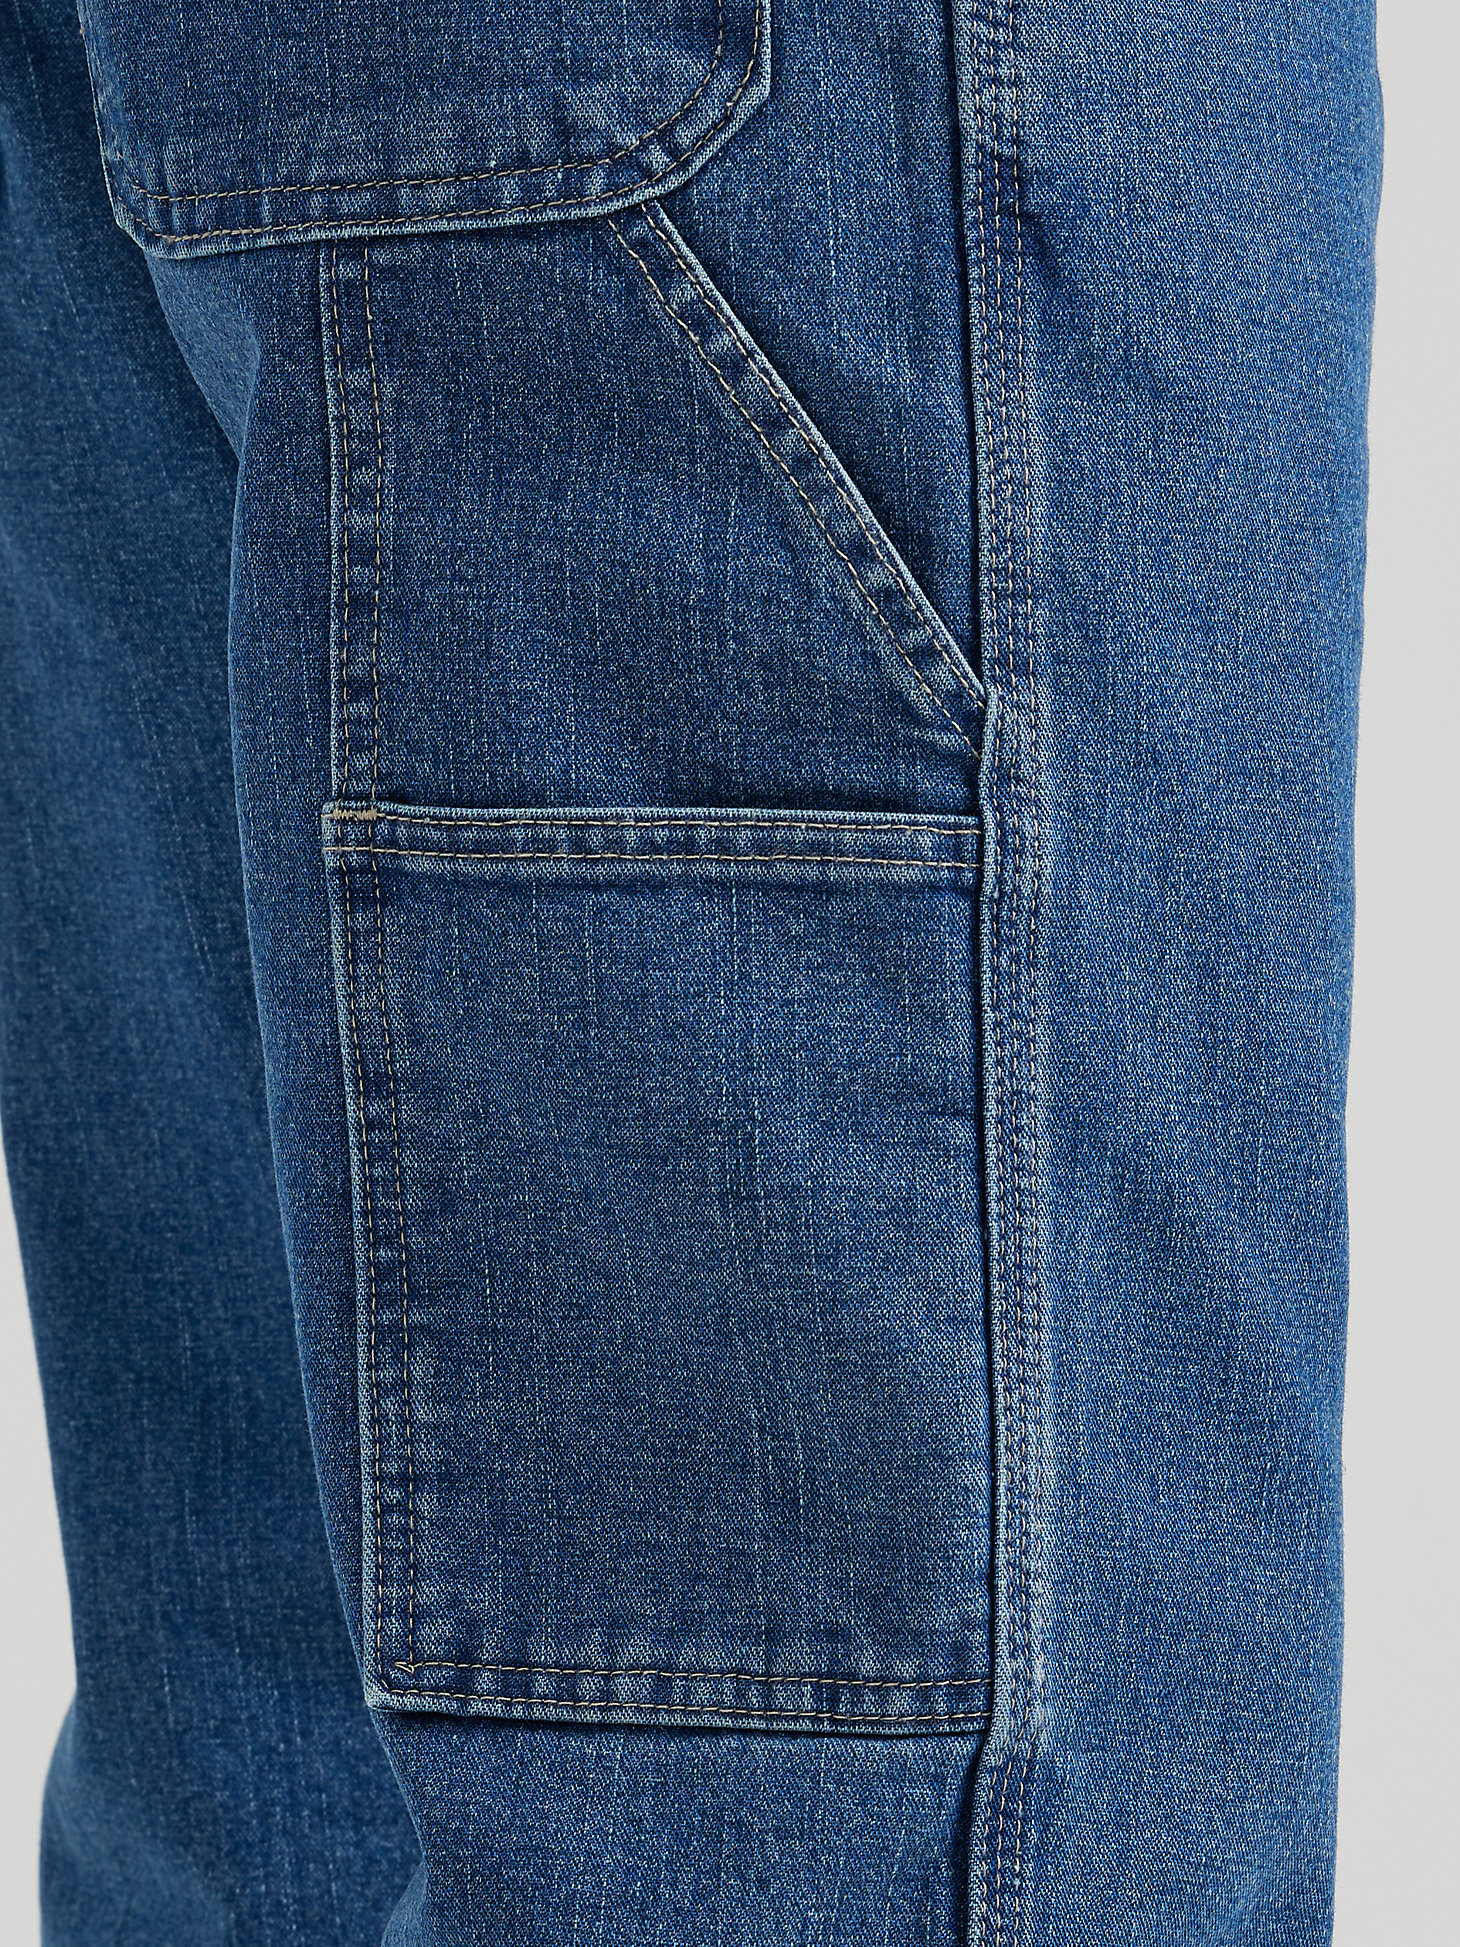 Wrangler® Men's Five Star Premium Carpenter Jean in Mid Indigo alternative view 6